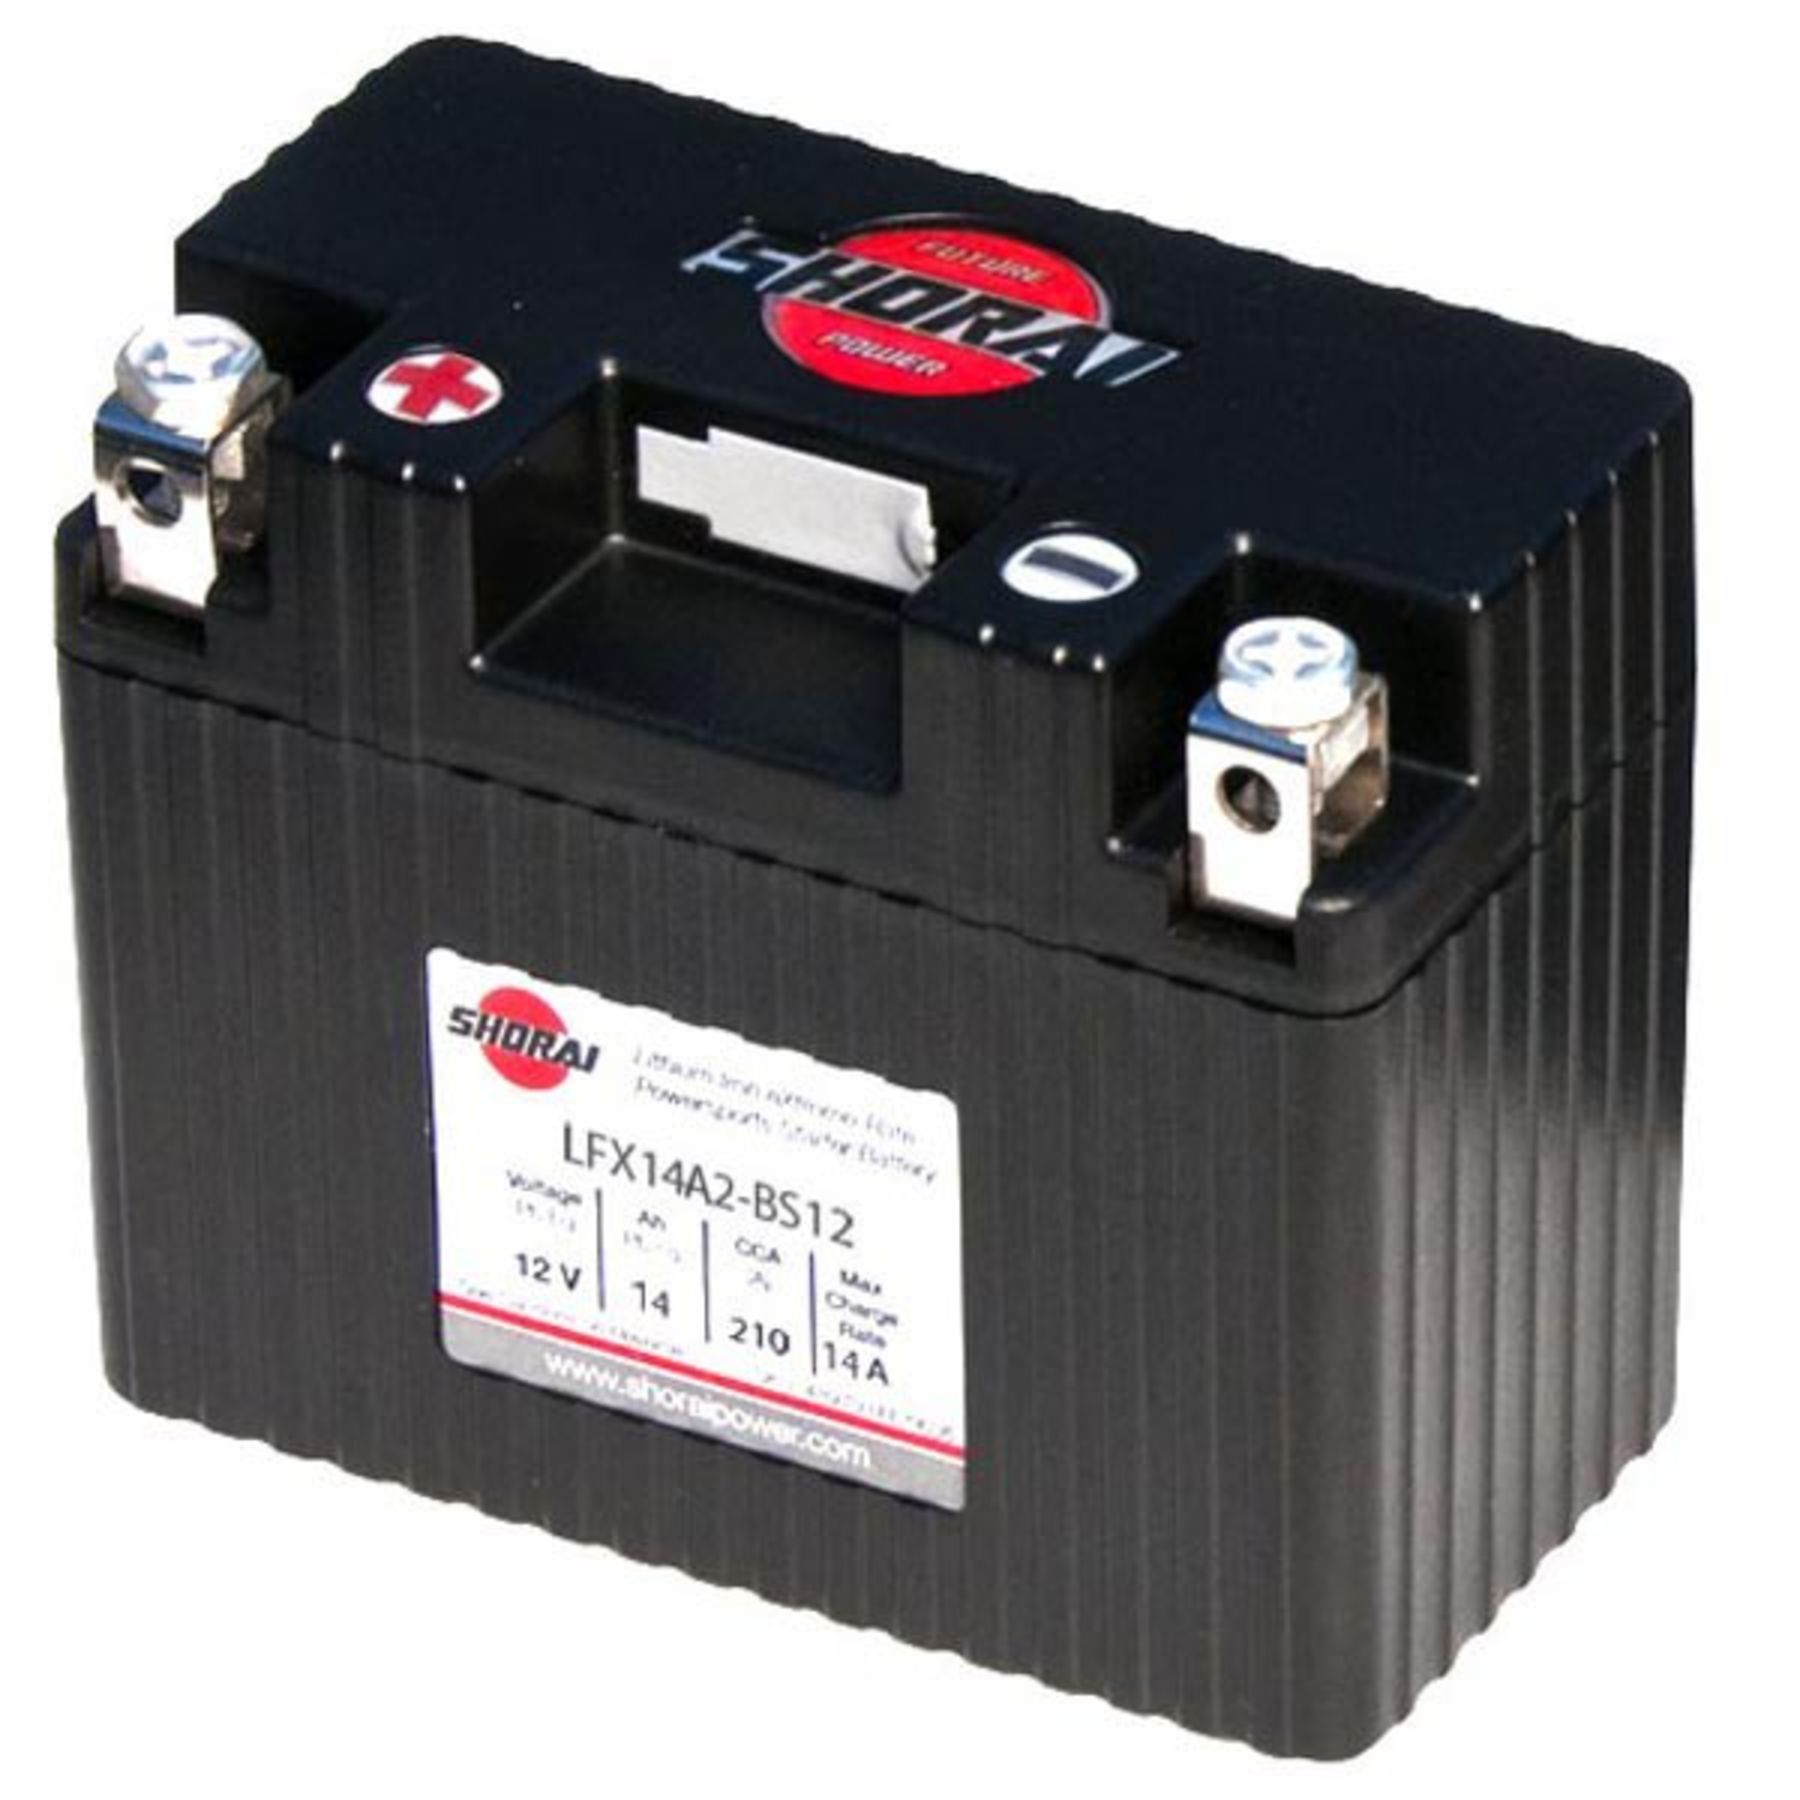 LiFePO4 Battery | 14ah 12v Lithium Motorcycle / ATV Batteries LFX14A2-BS12